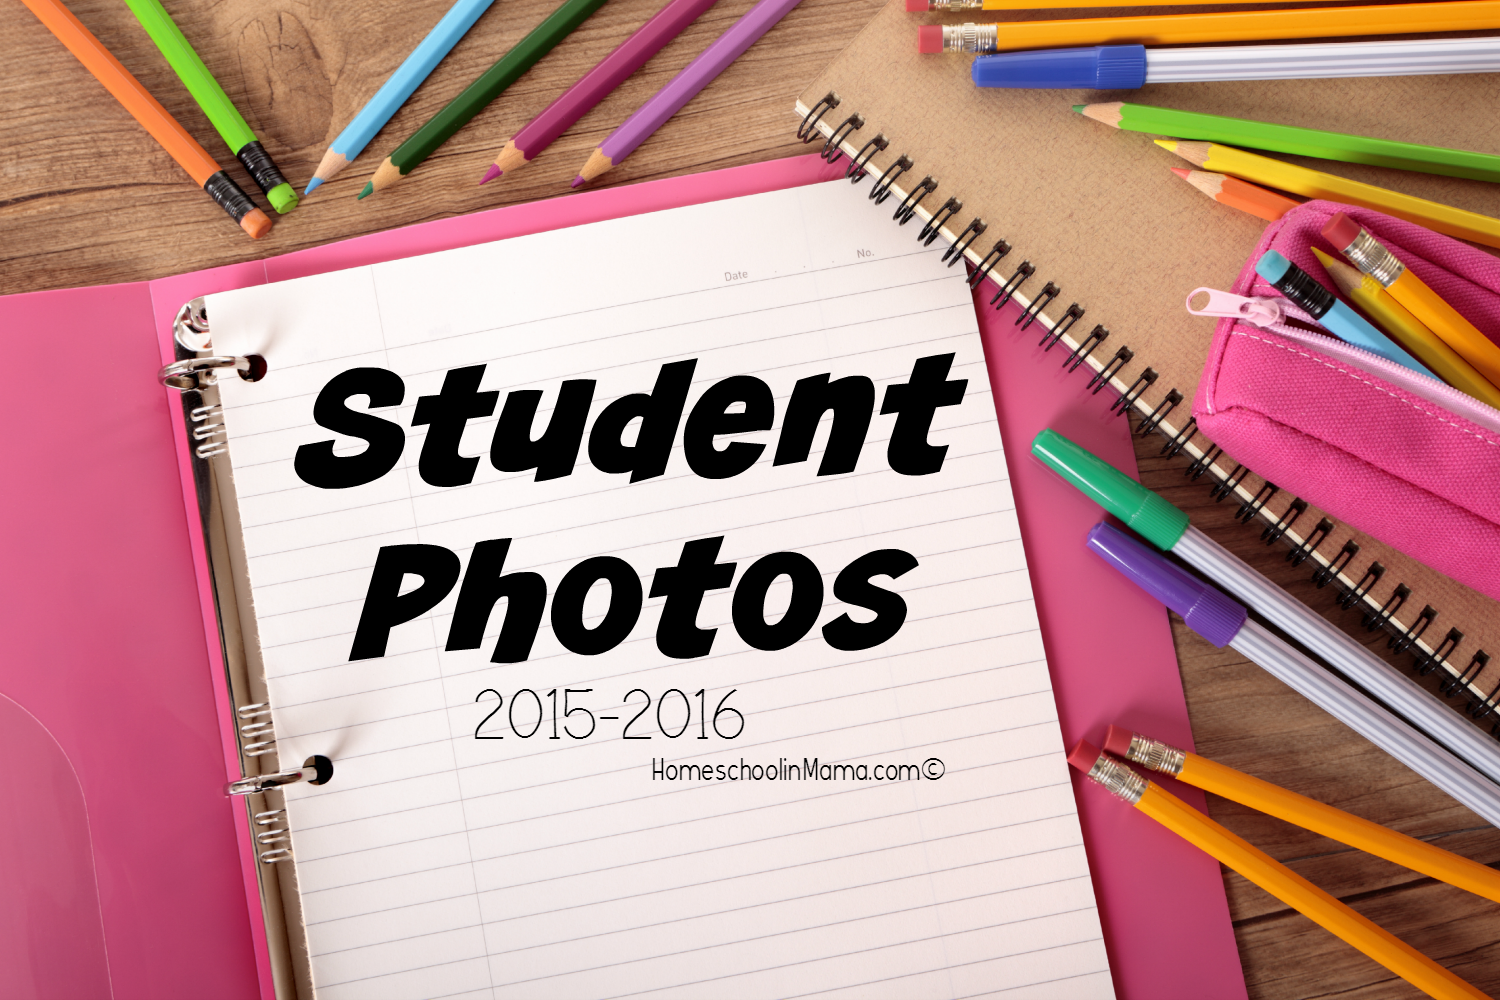 Student Photos 2015-2016